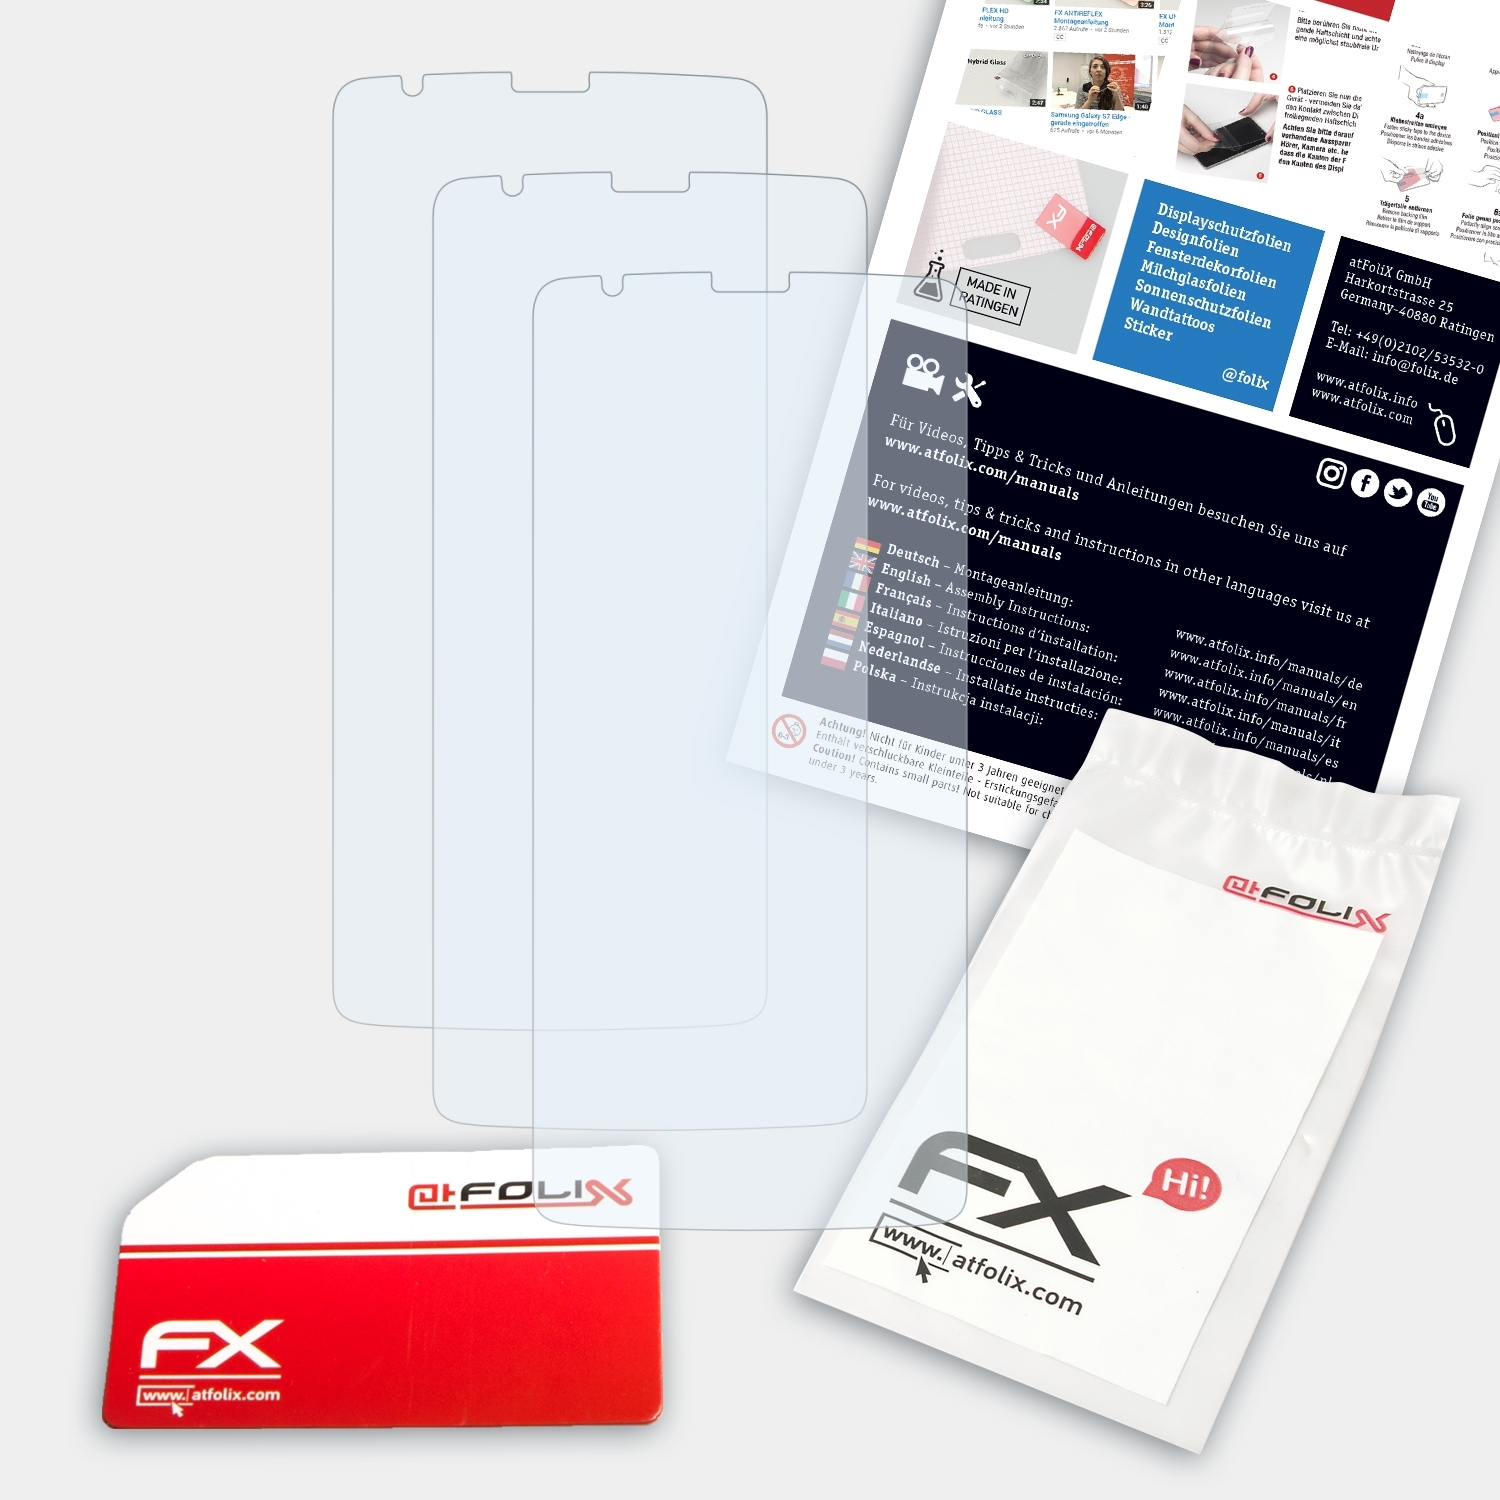 ATFOLIX 3x FX-Clear Displayschutz(für Blackview A20)